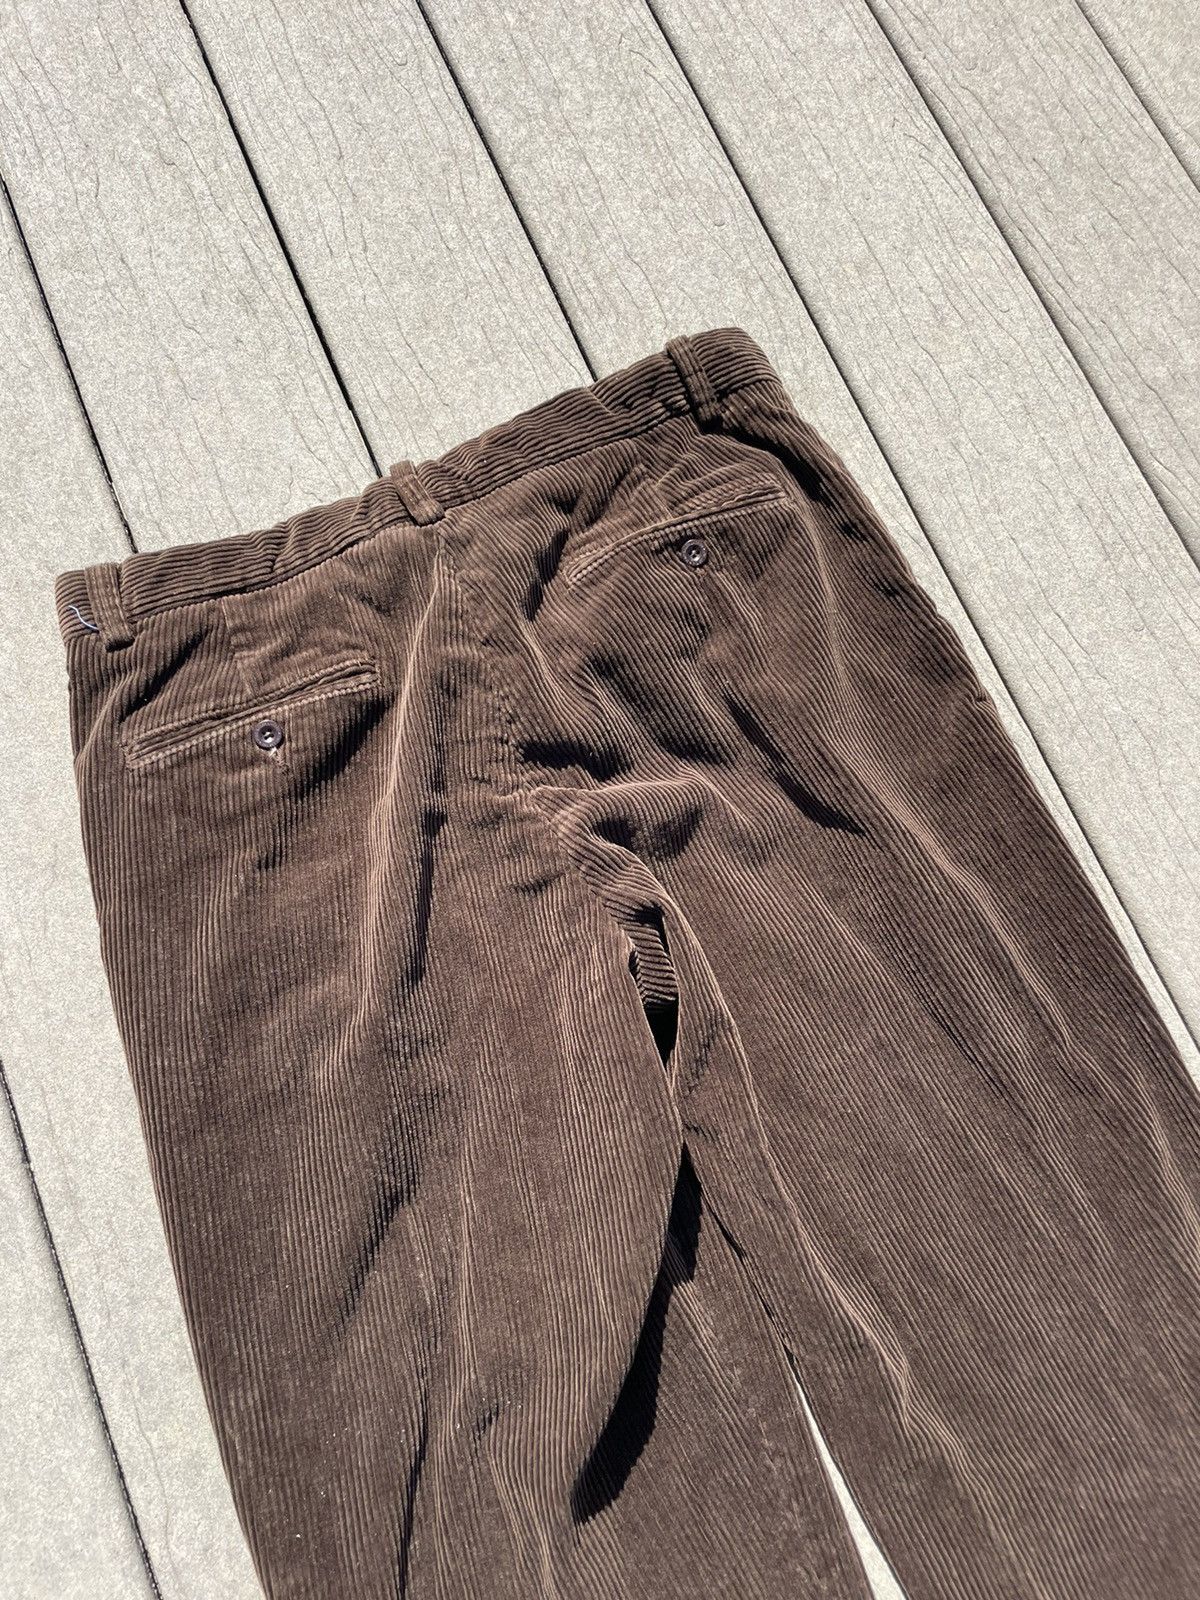 Vintage Dark Brown Corduroy Pants Size US 33 - 5 Preview